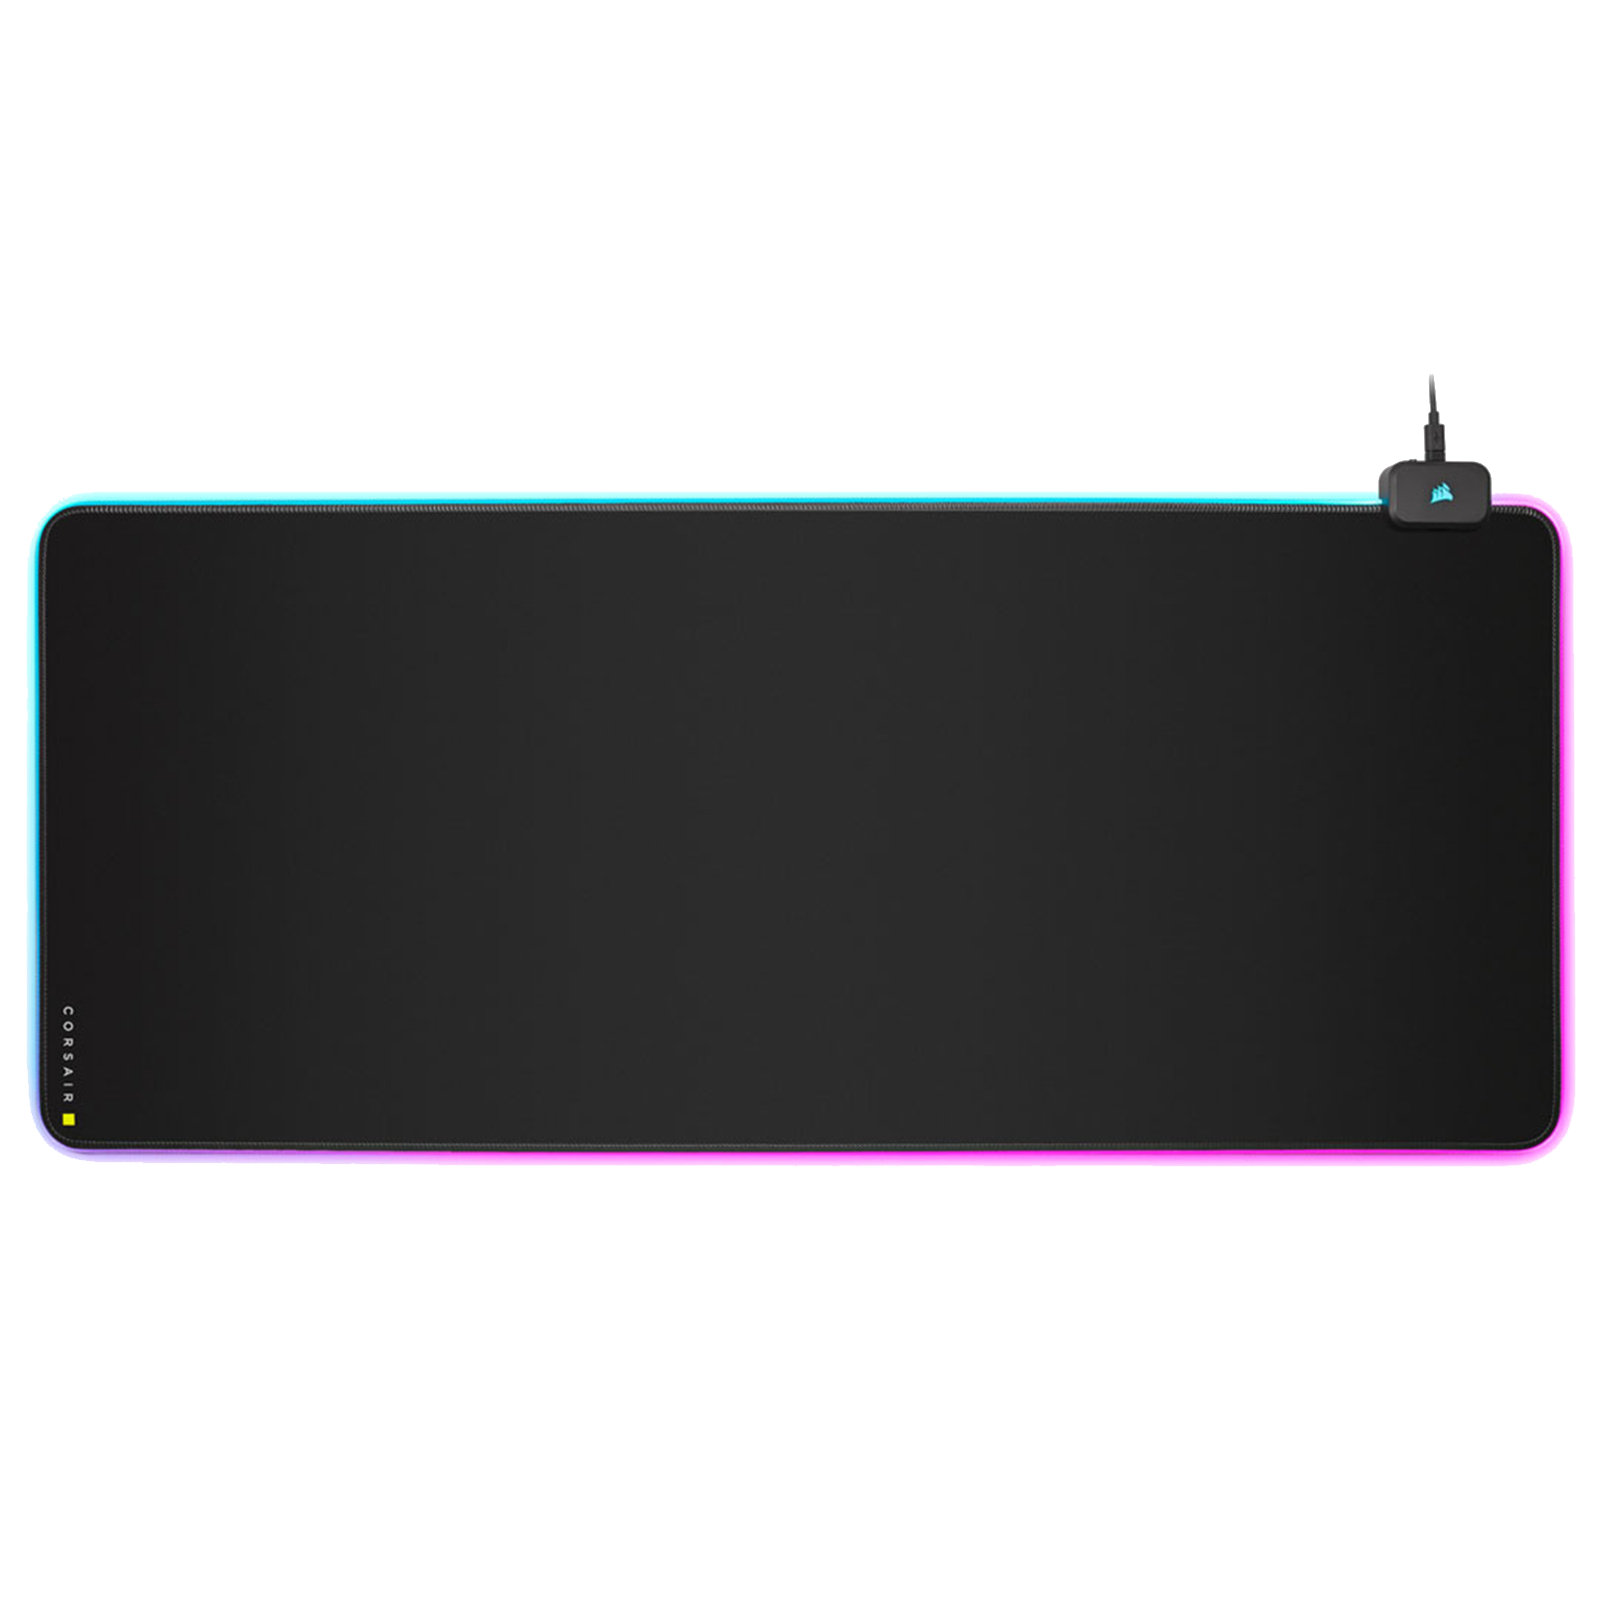 Corsair MM700 RGB Extended Cloth Mousepad